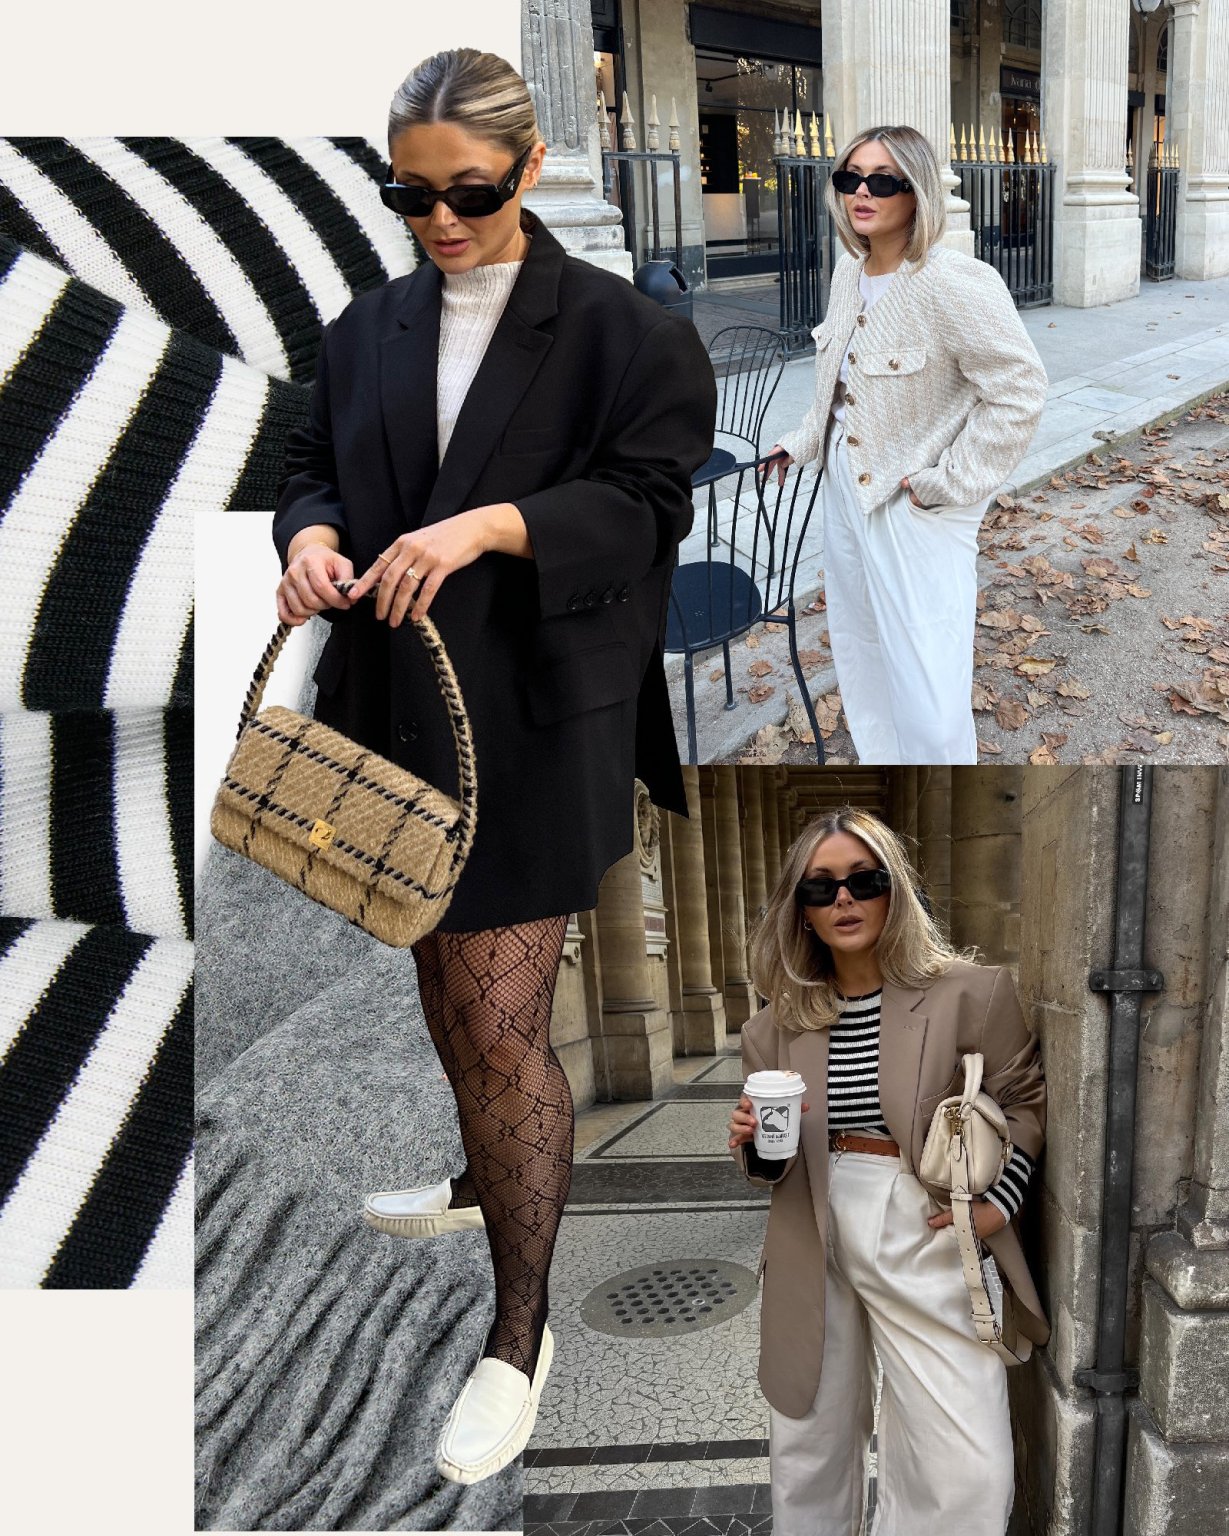 Parisian Style: How To Dress Like A Chic Parisian Woman If You're Petite